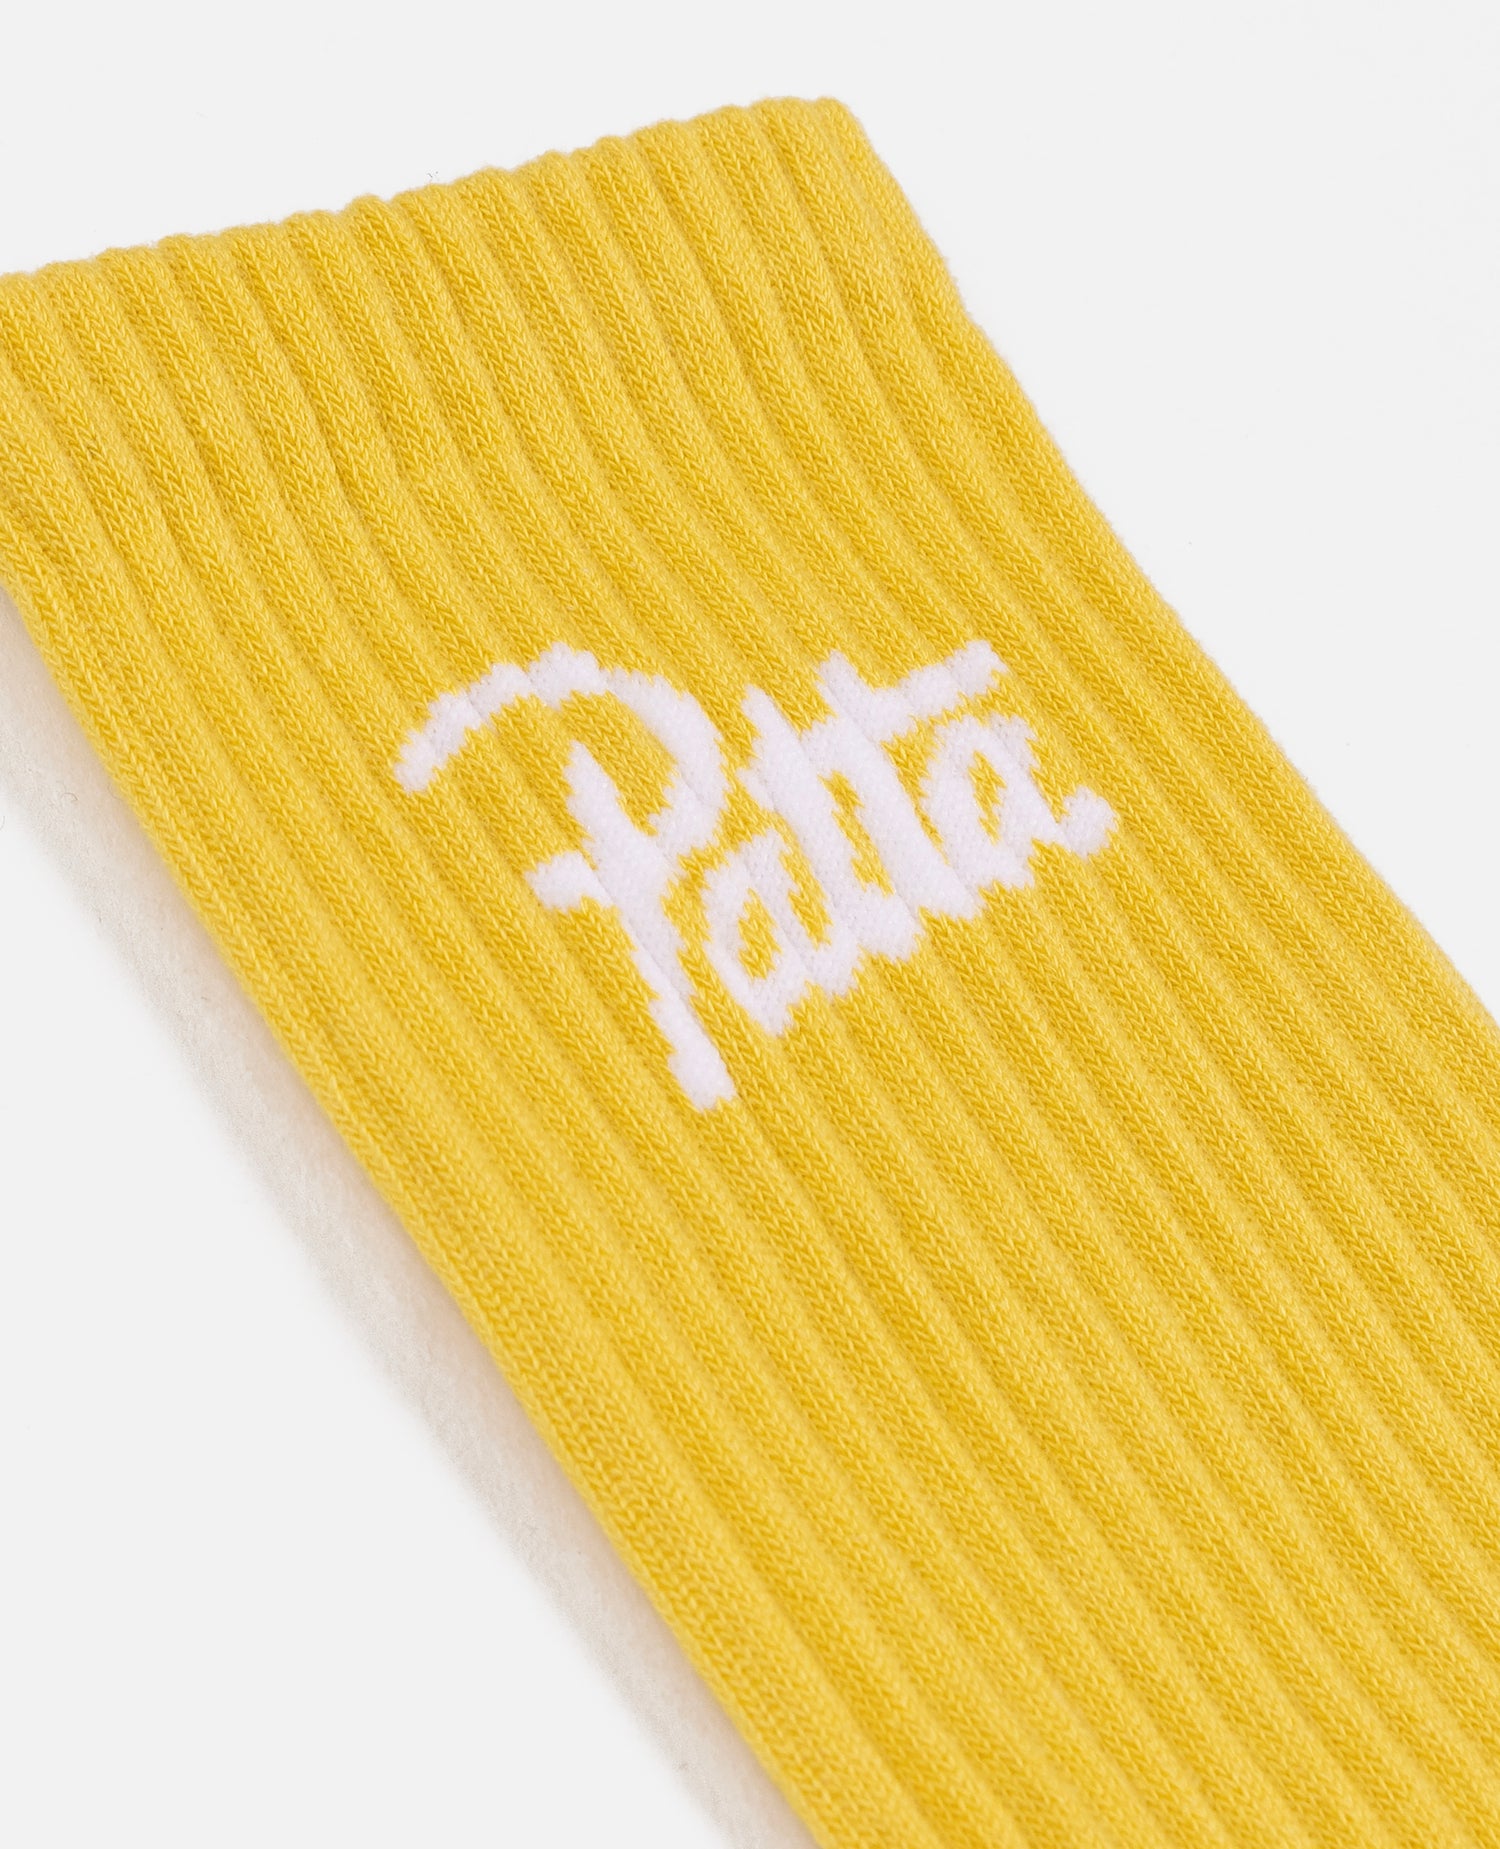 Patta Basic Sport Socks (Old Gold)